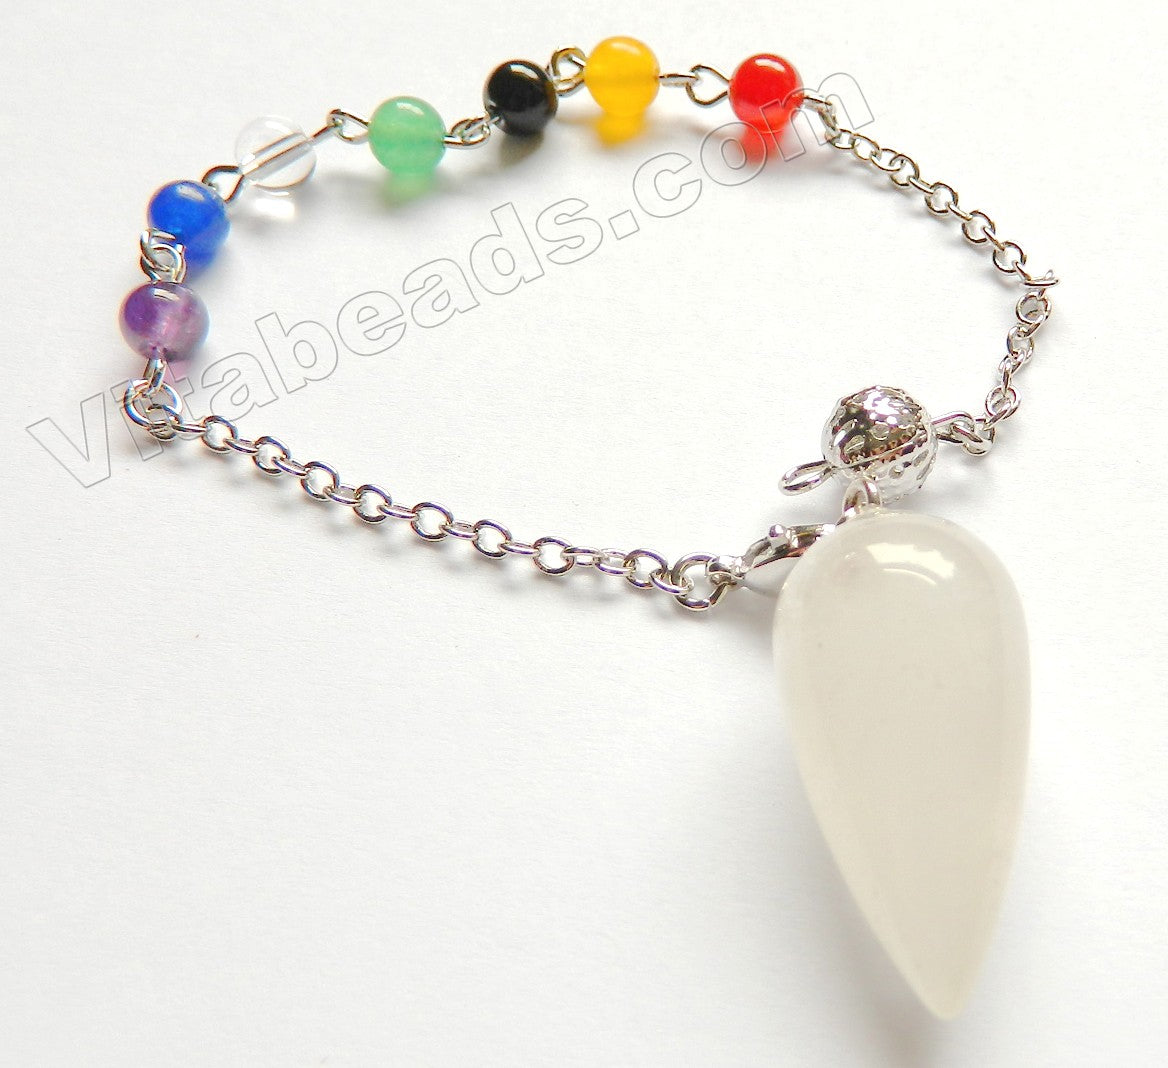 7 Gemstone Chakra Chain w/ Pendant Bracelet, Anklet - Rock Crystal